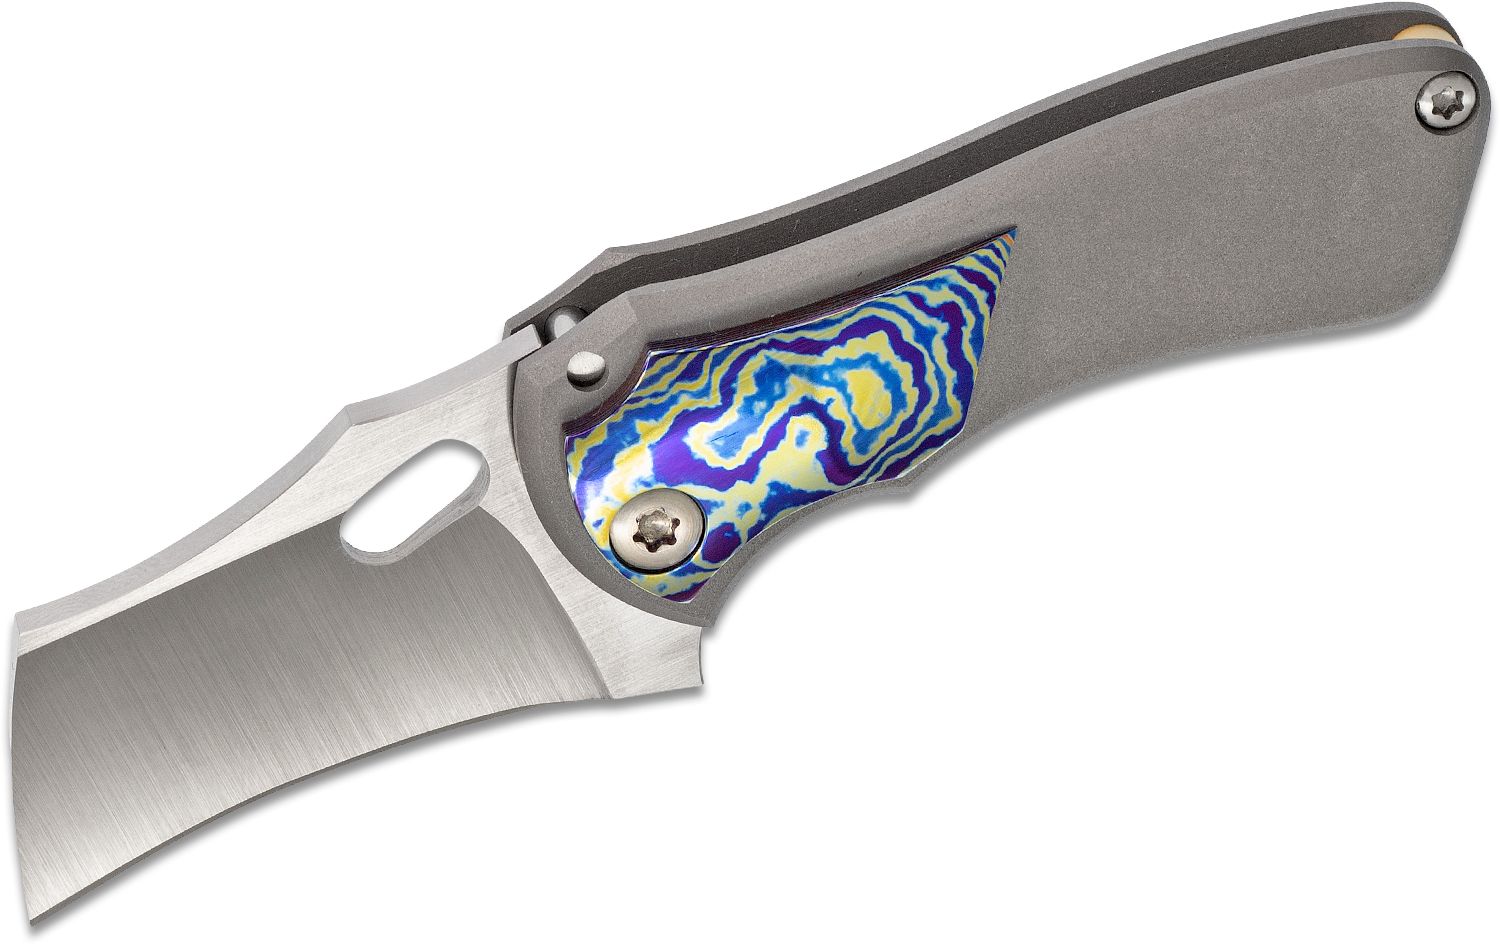 Toxic Blades Custom Eagle Eye Folding Knife 1.75 CPM-154 Hawkbill Blade,  Milled Titanium Handles with Timascus Onlays - KnifeCenter